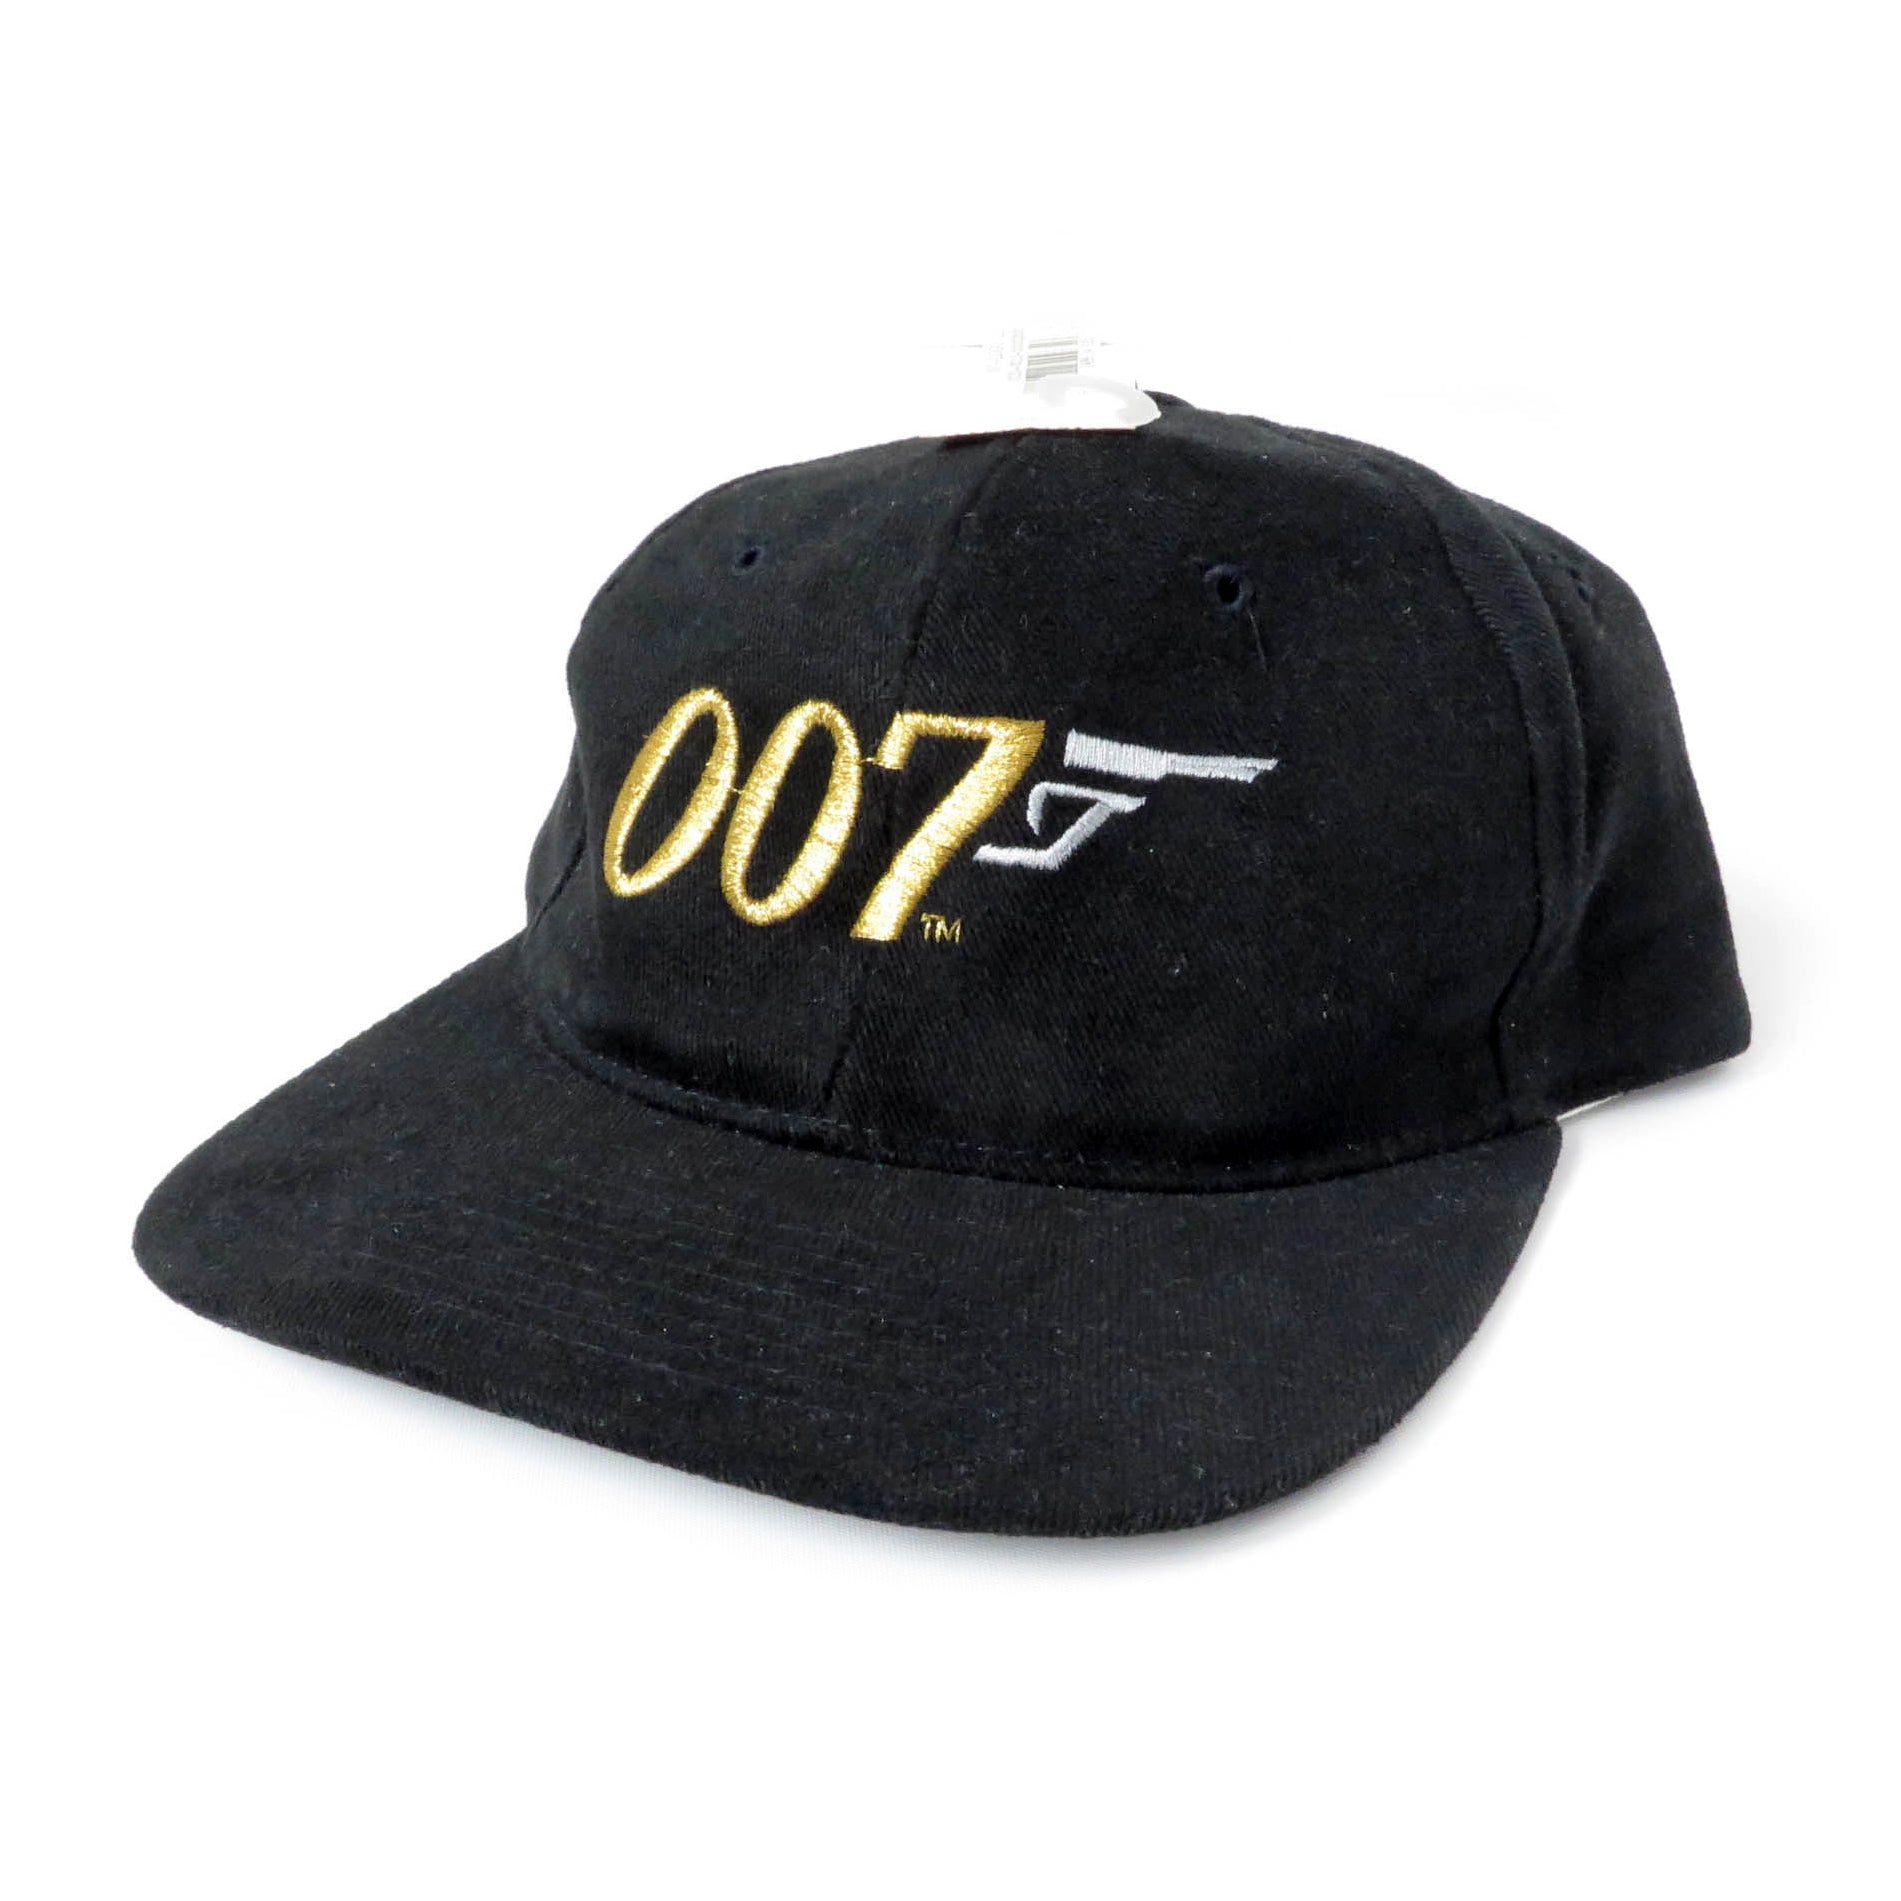 Vintage James Bond 007 Goldeneye Snapback Hat